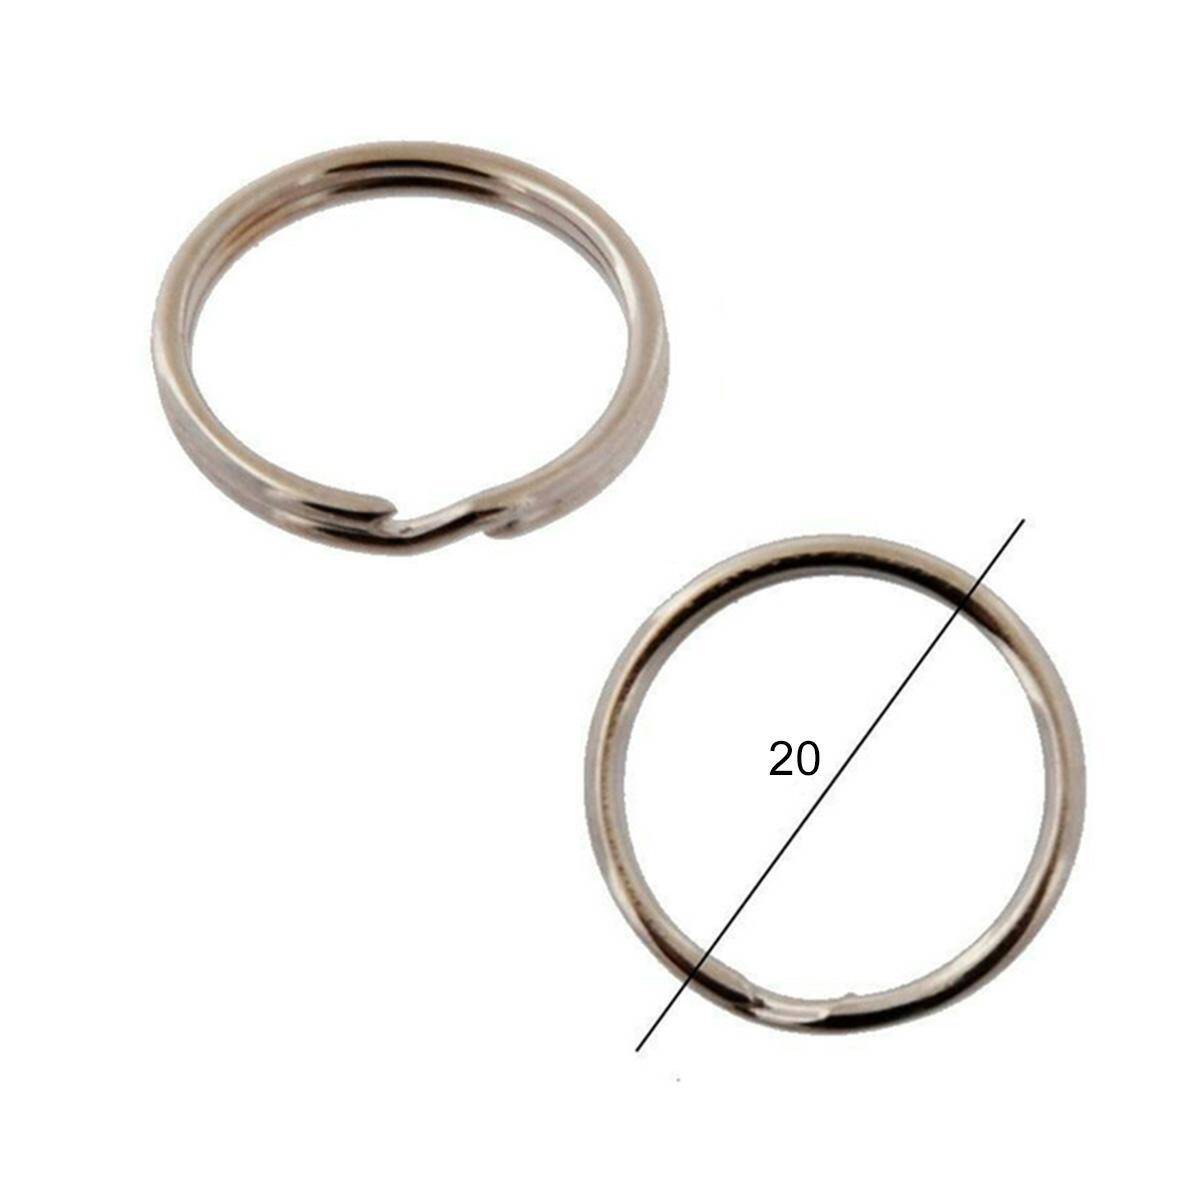 Key rings -  20mm